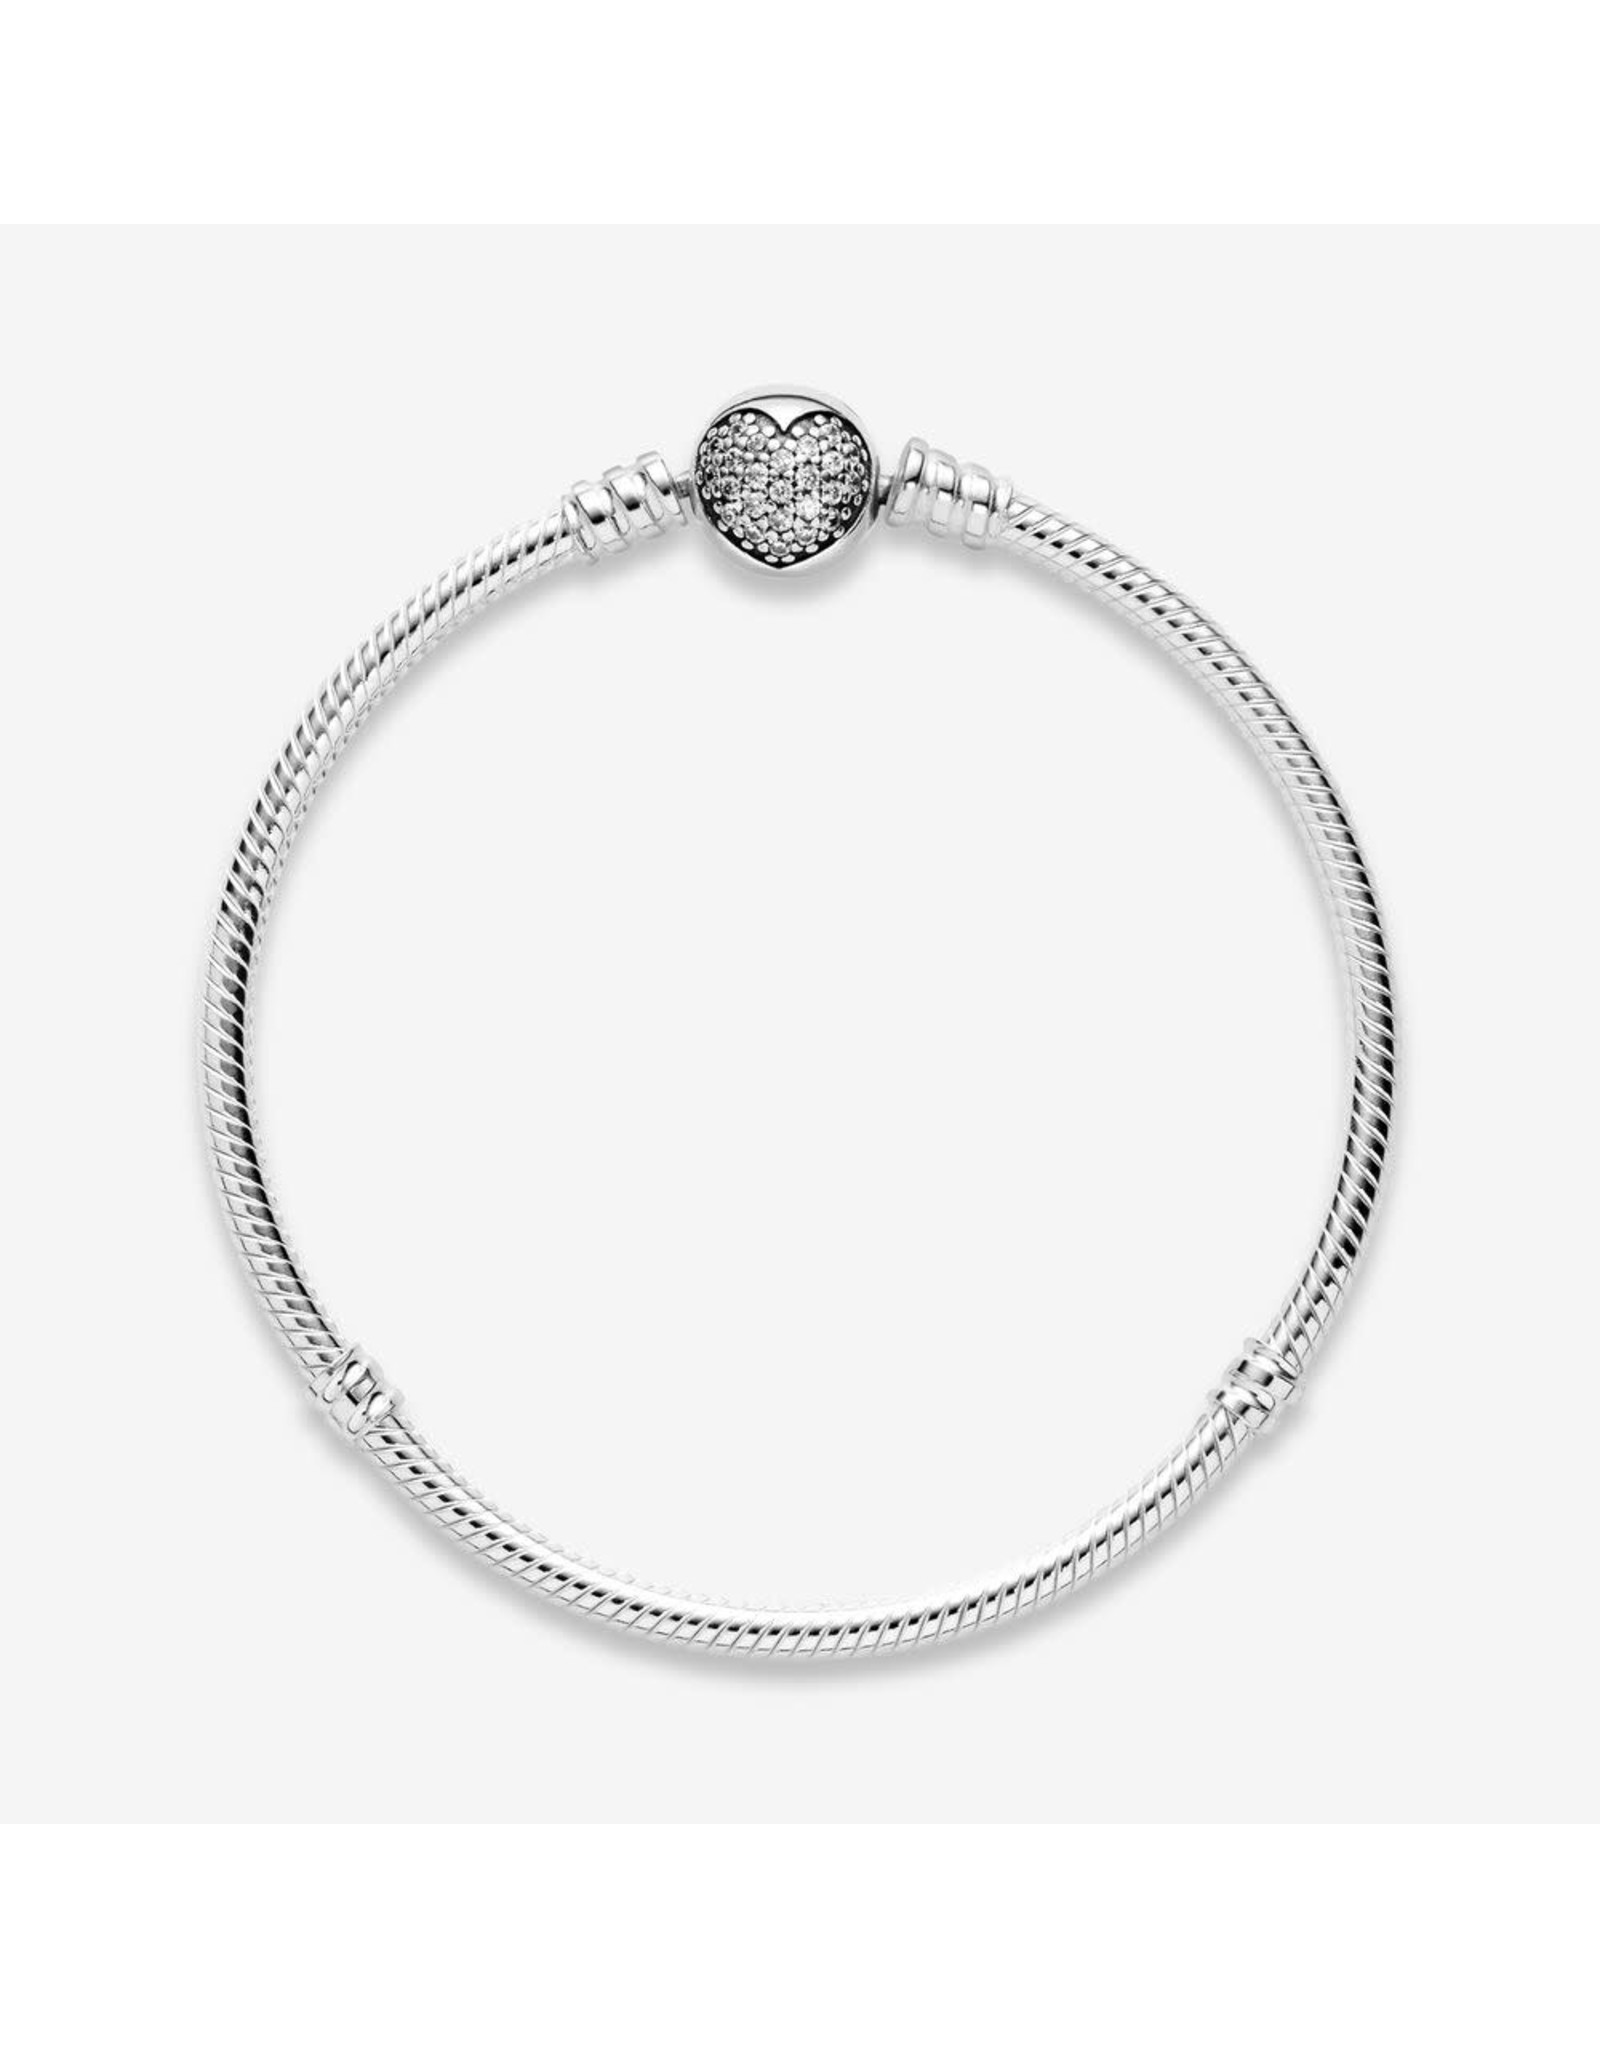 Pandora Pandora Bracelet,590743CZ,  Sparkling Heart Clasp Snake Chain, Sterling Silver CZ